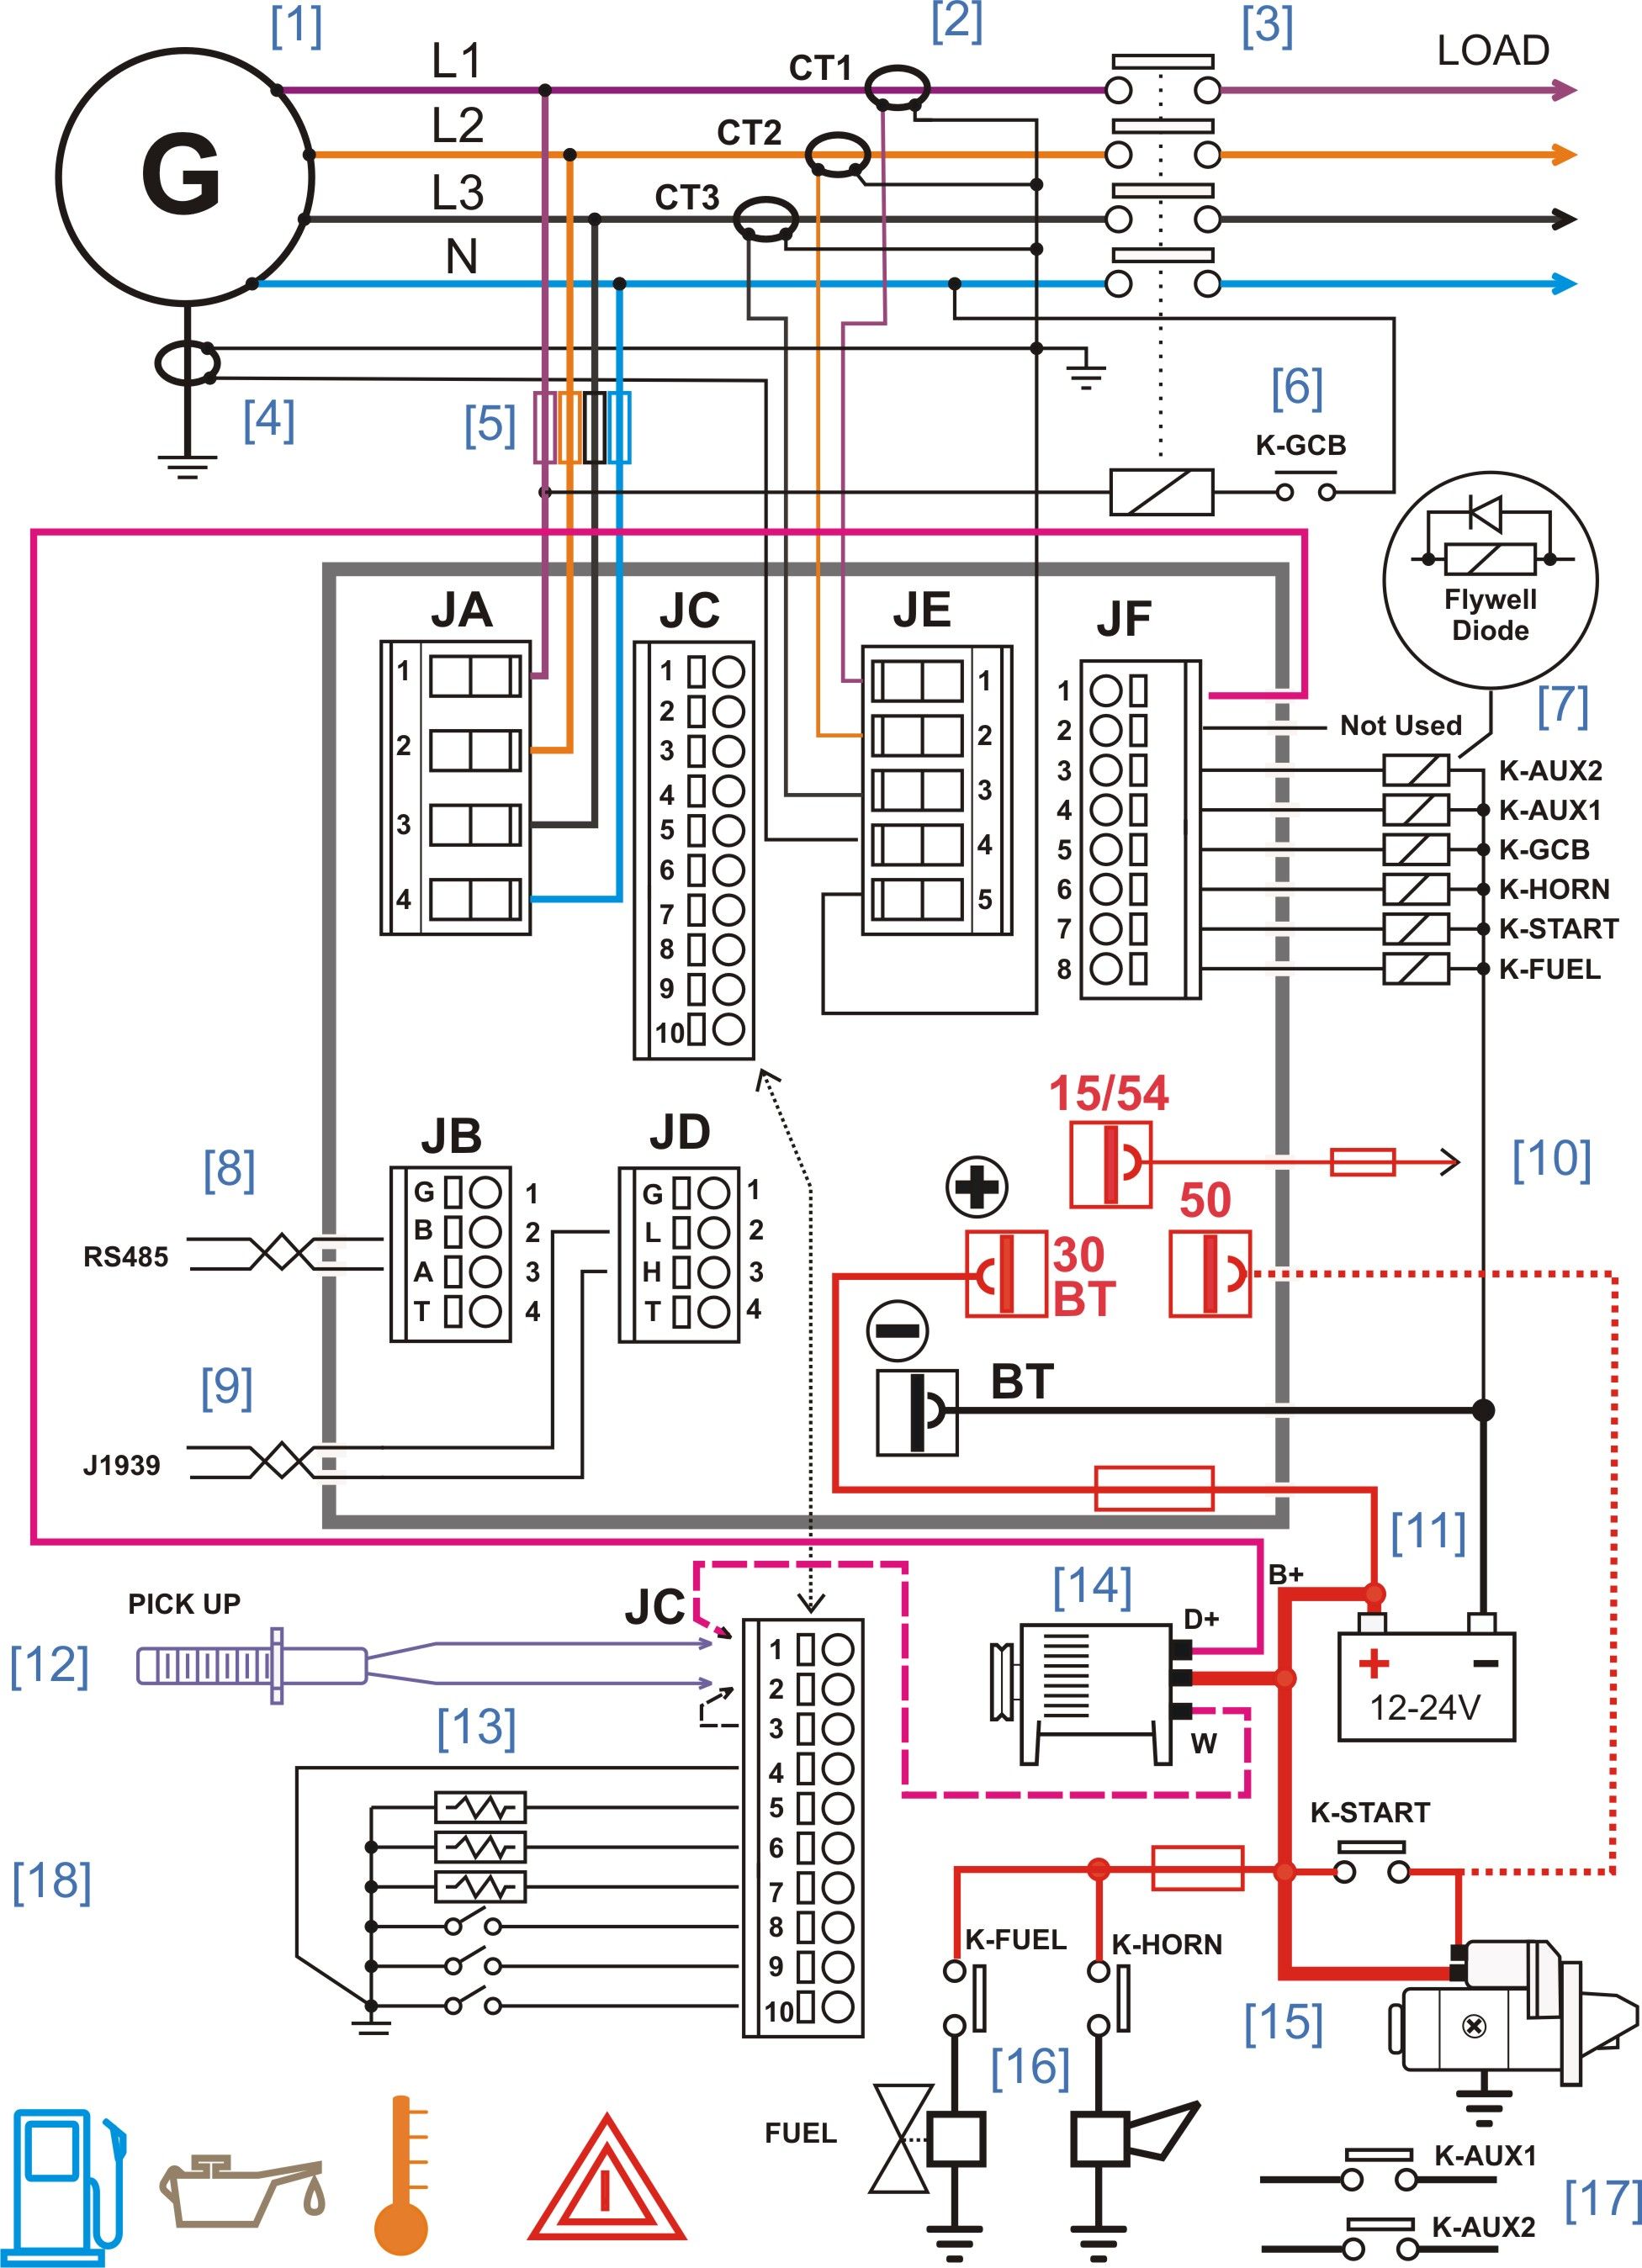 lennox dsl-450 lx thermostat wiring diagram.